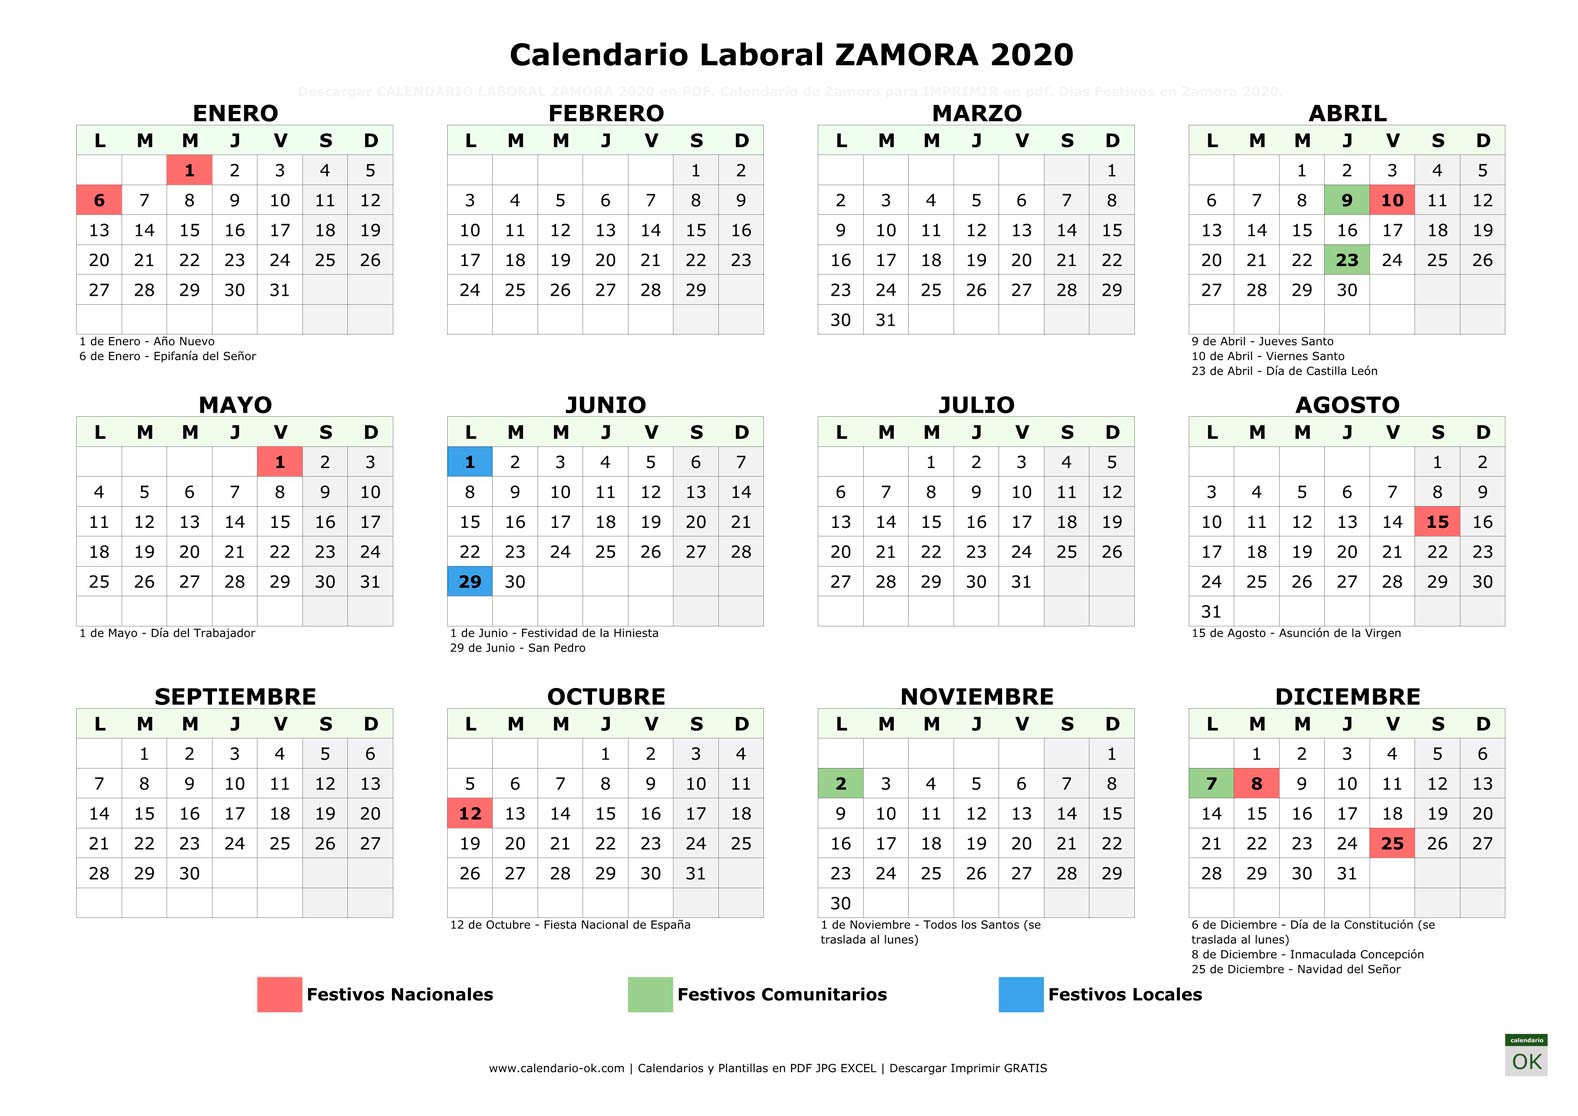 Calendario Laboral ZAMORA 2020 horizontal